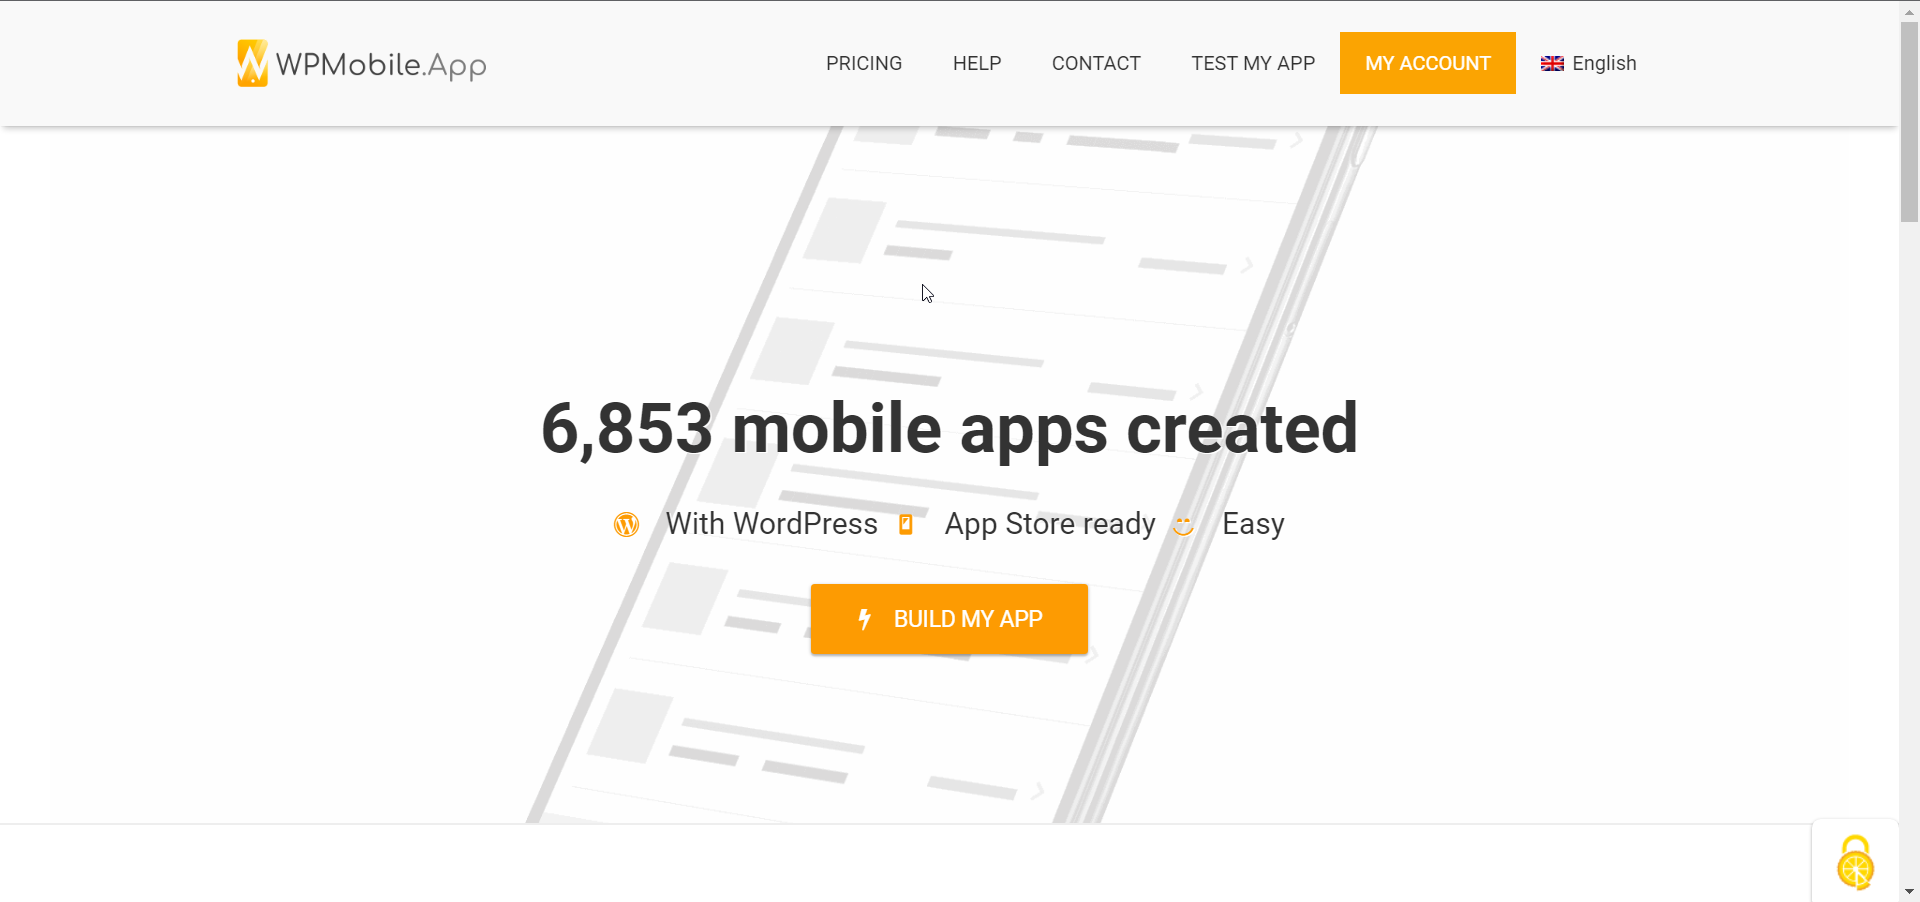 WPMobile App - WordPress to app